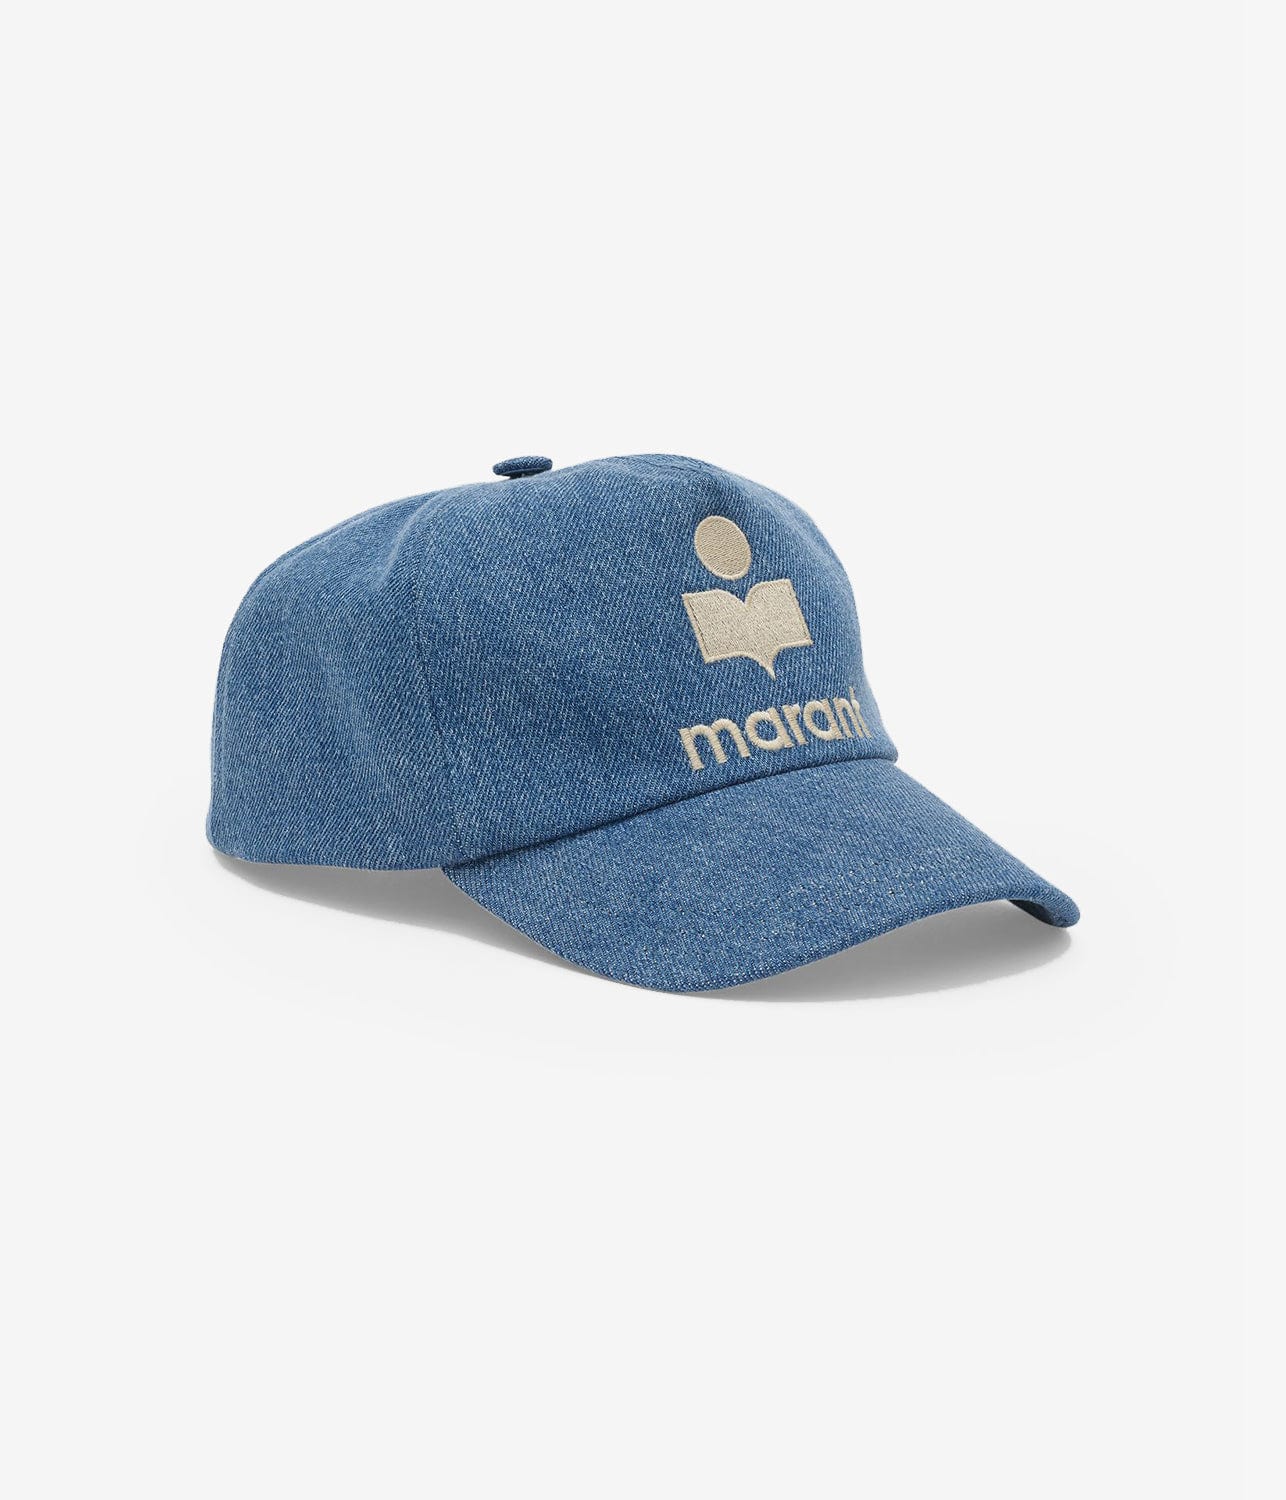 ISABEL MARANT TYRON CAP-LIGHT BLUE